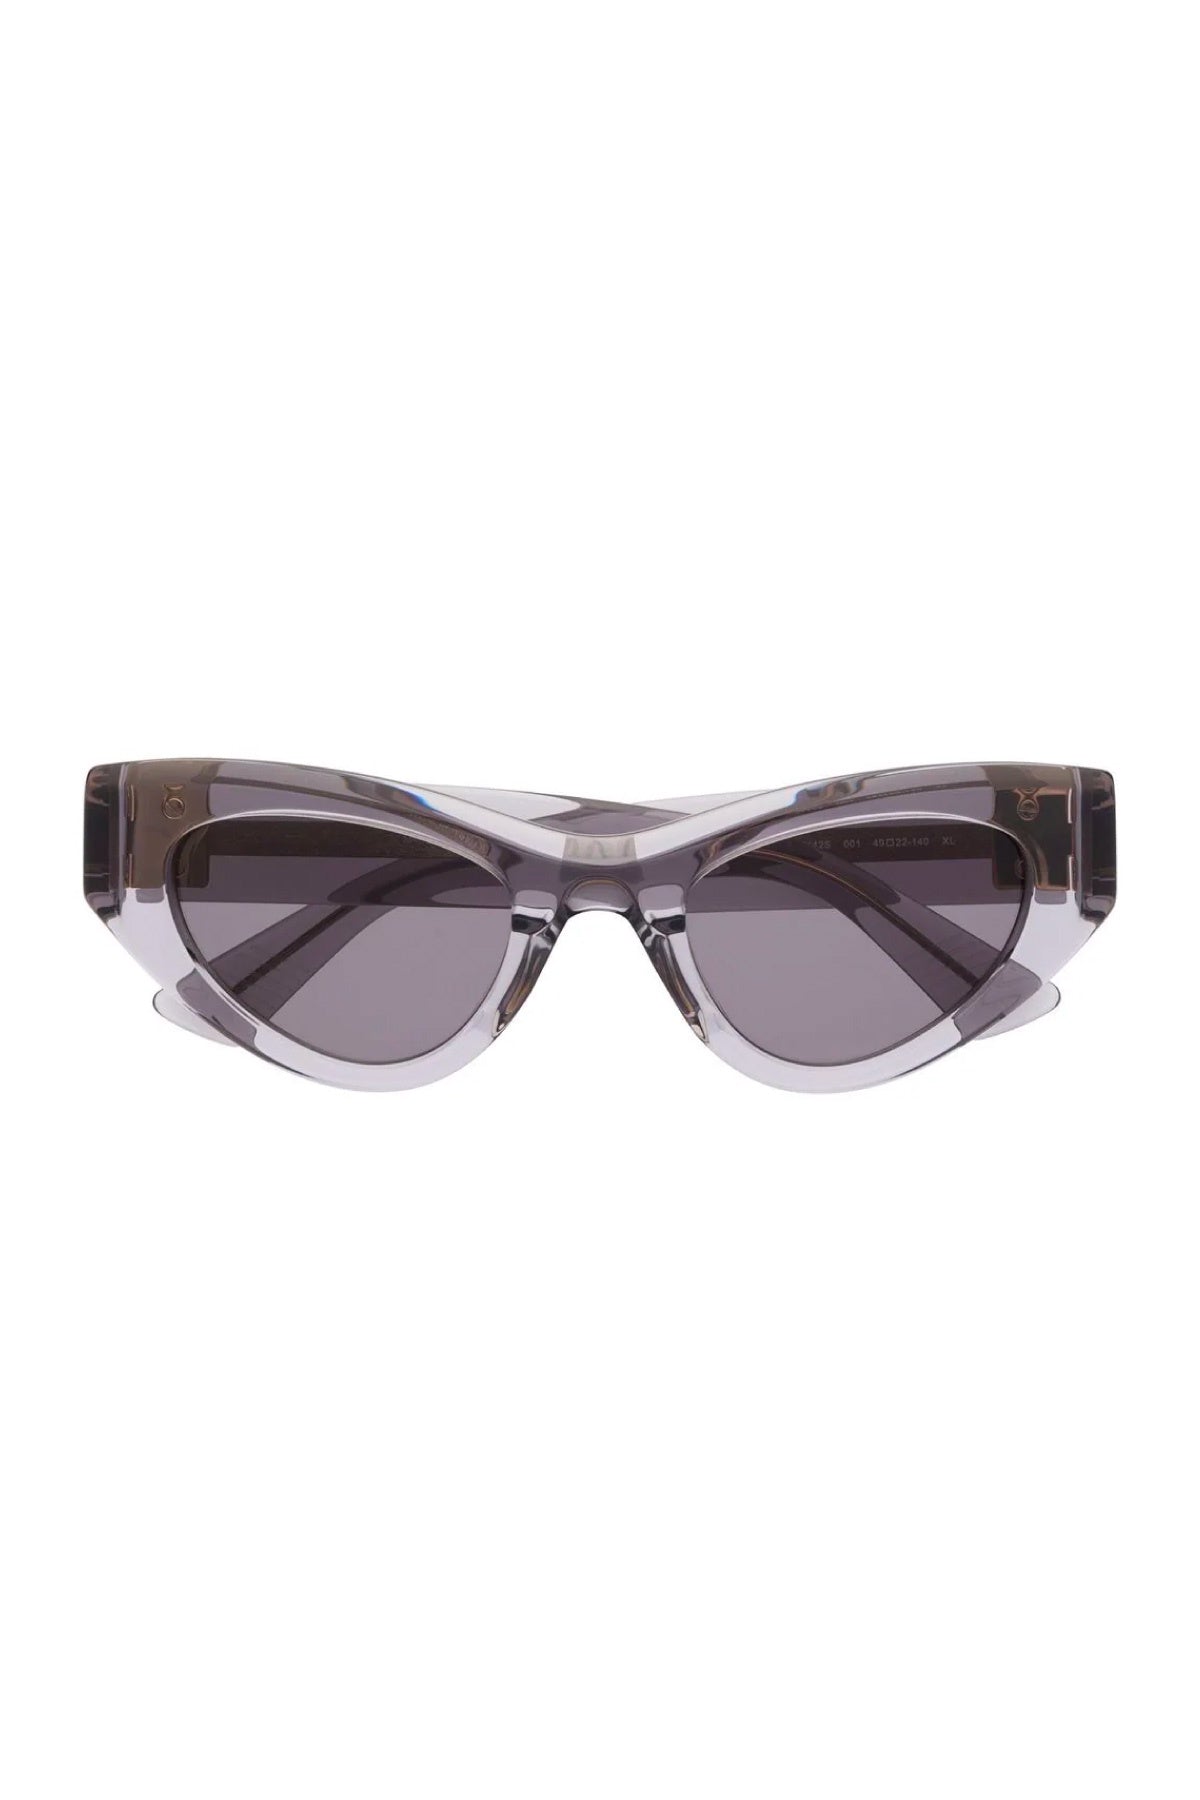 Bottega Veneta Oval Sunglasses - Grey